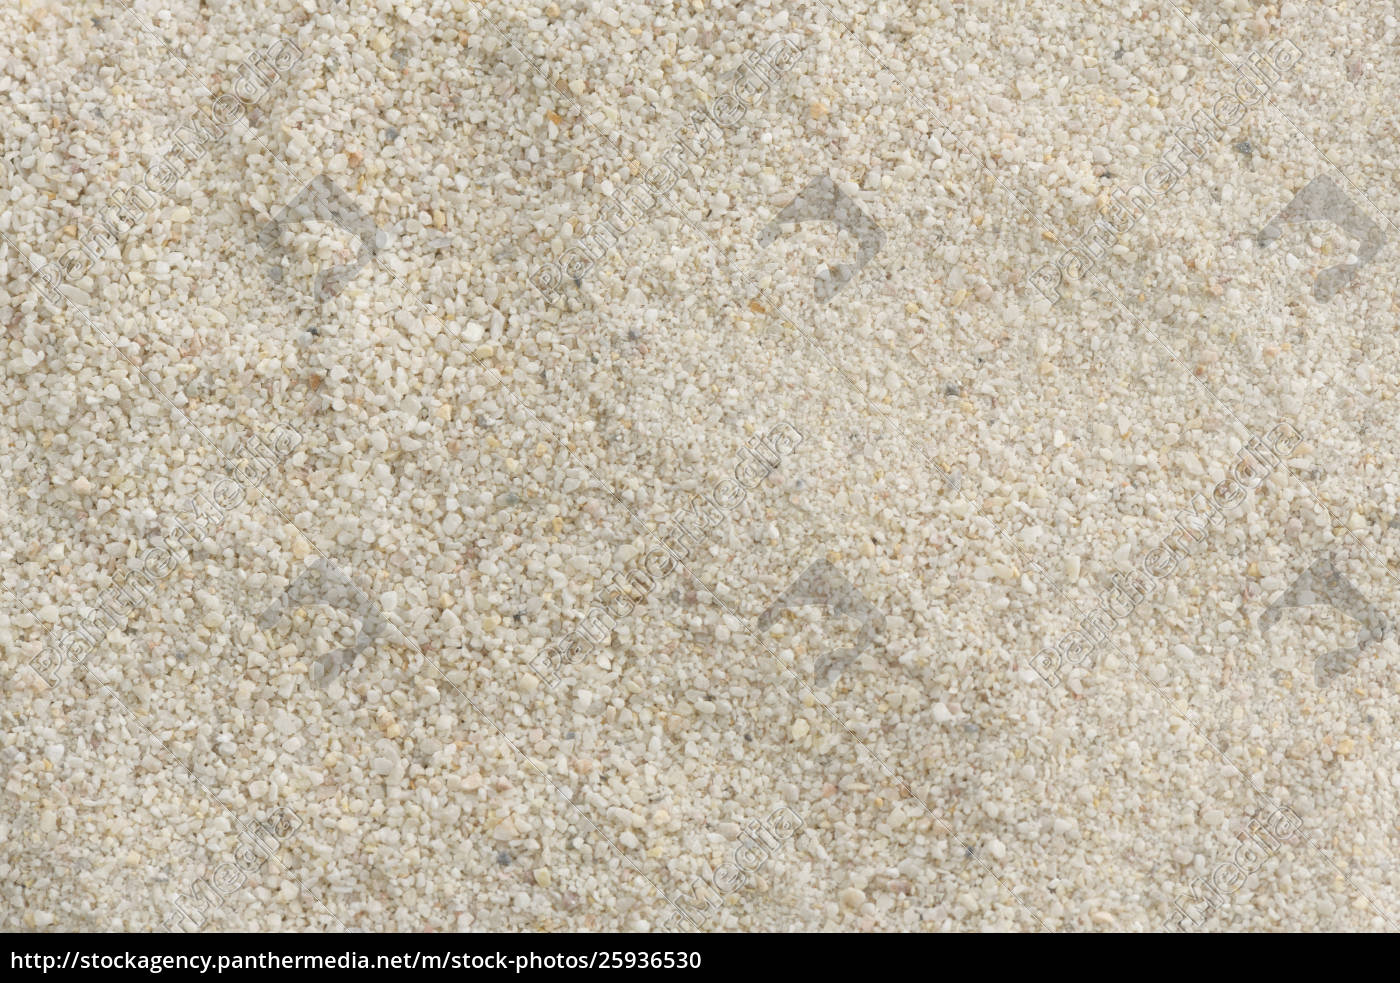 lys s skyskraber George Eliot Dolomite lime Dolomitic limestone garden soil - Royalty free image -  #25936530 | PantherMedia Stock Agency